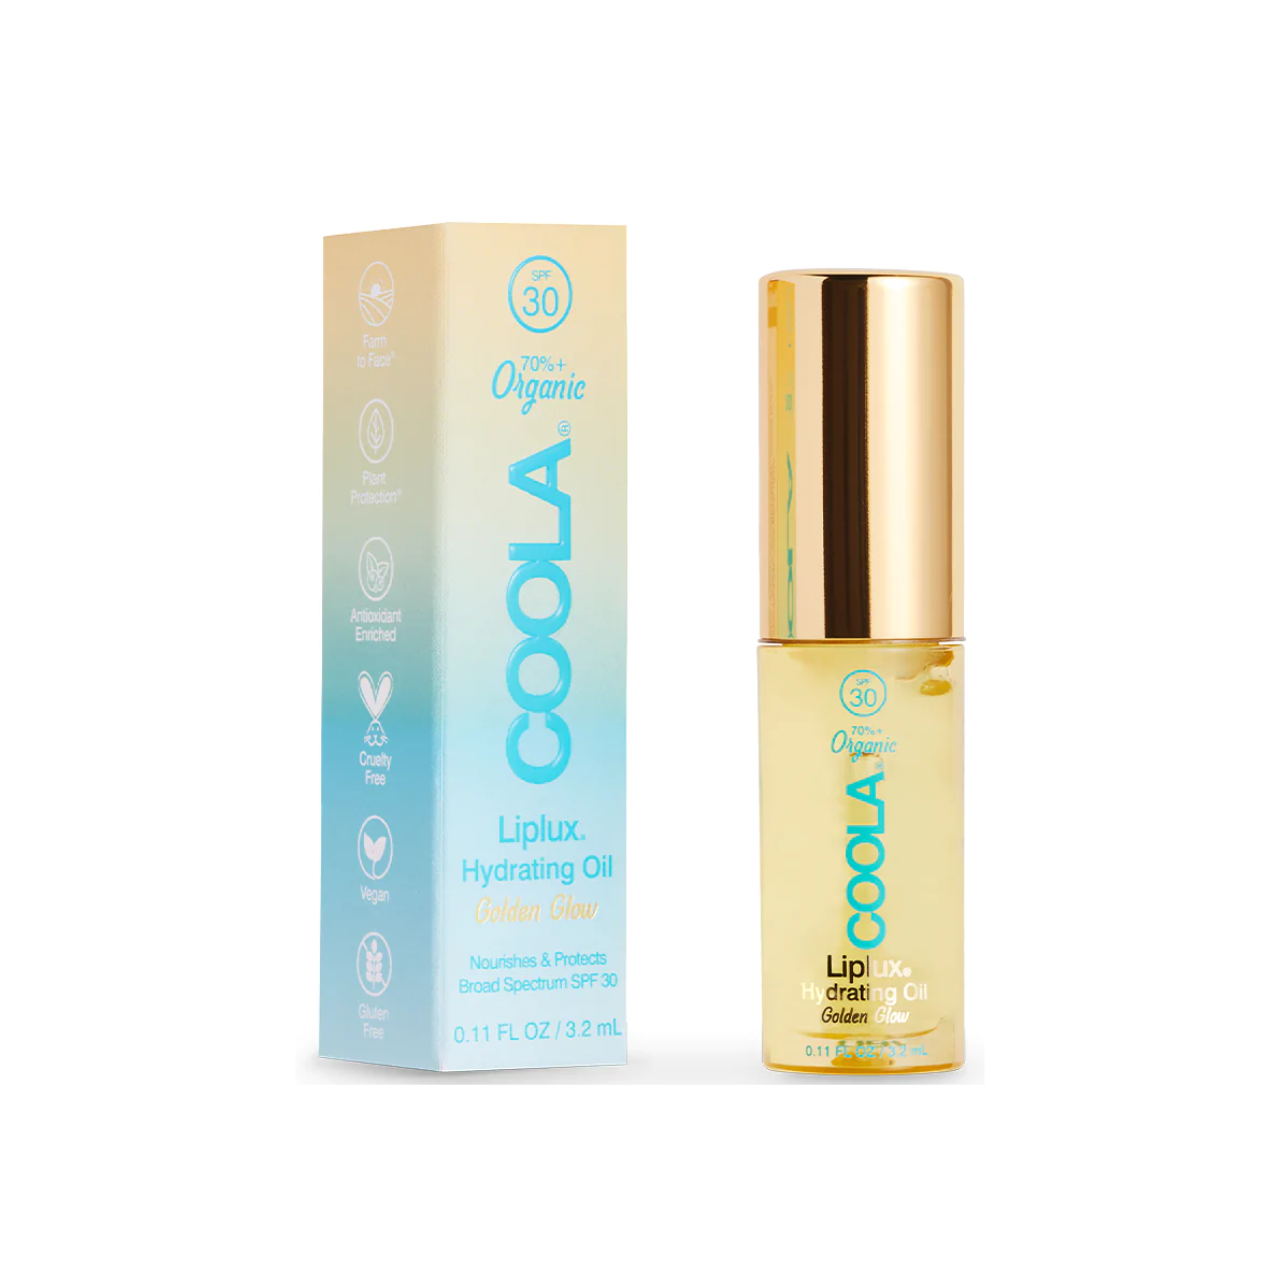 Coola Classic Liplux Organic Hydrating Lip Oil Sunscreen SPF 30